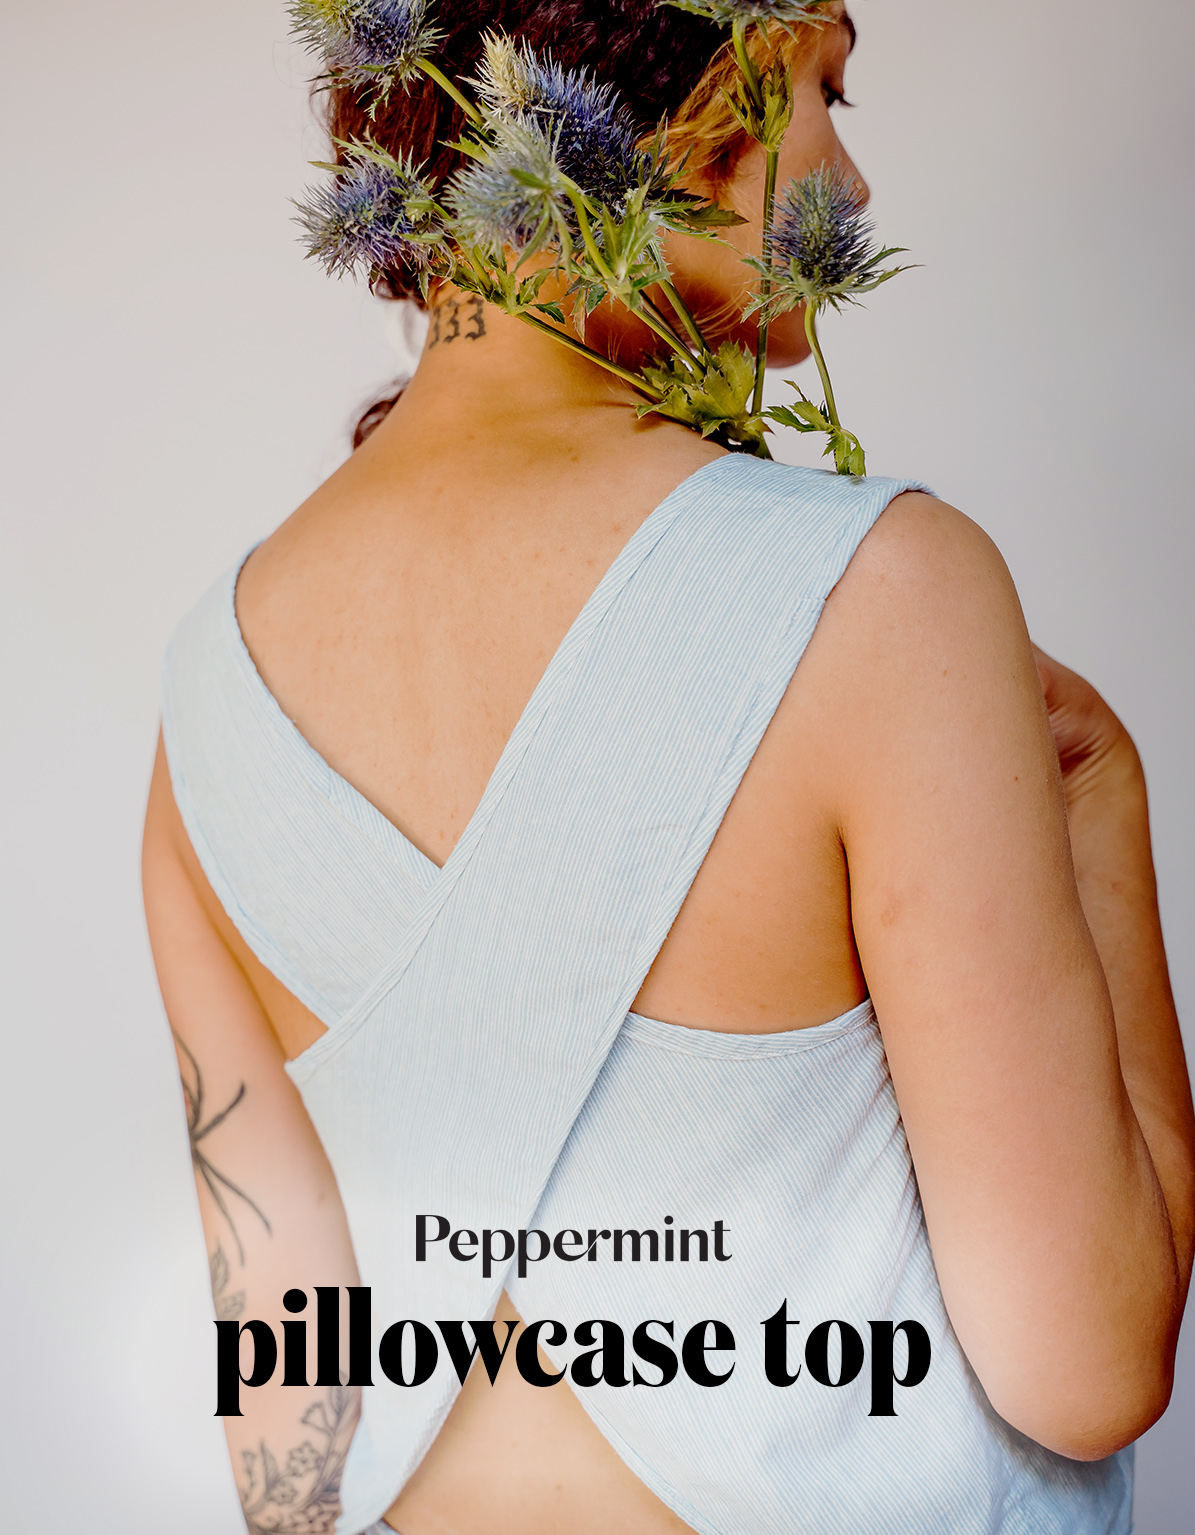 Peppermint Pillowcase Tops – DIY Project! - peppermint magazine